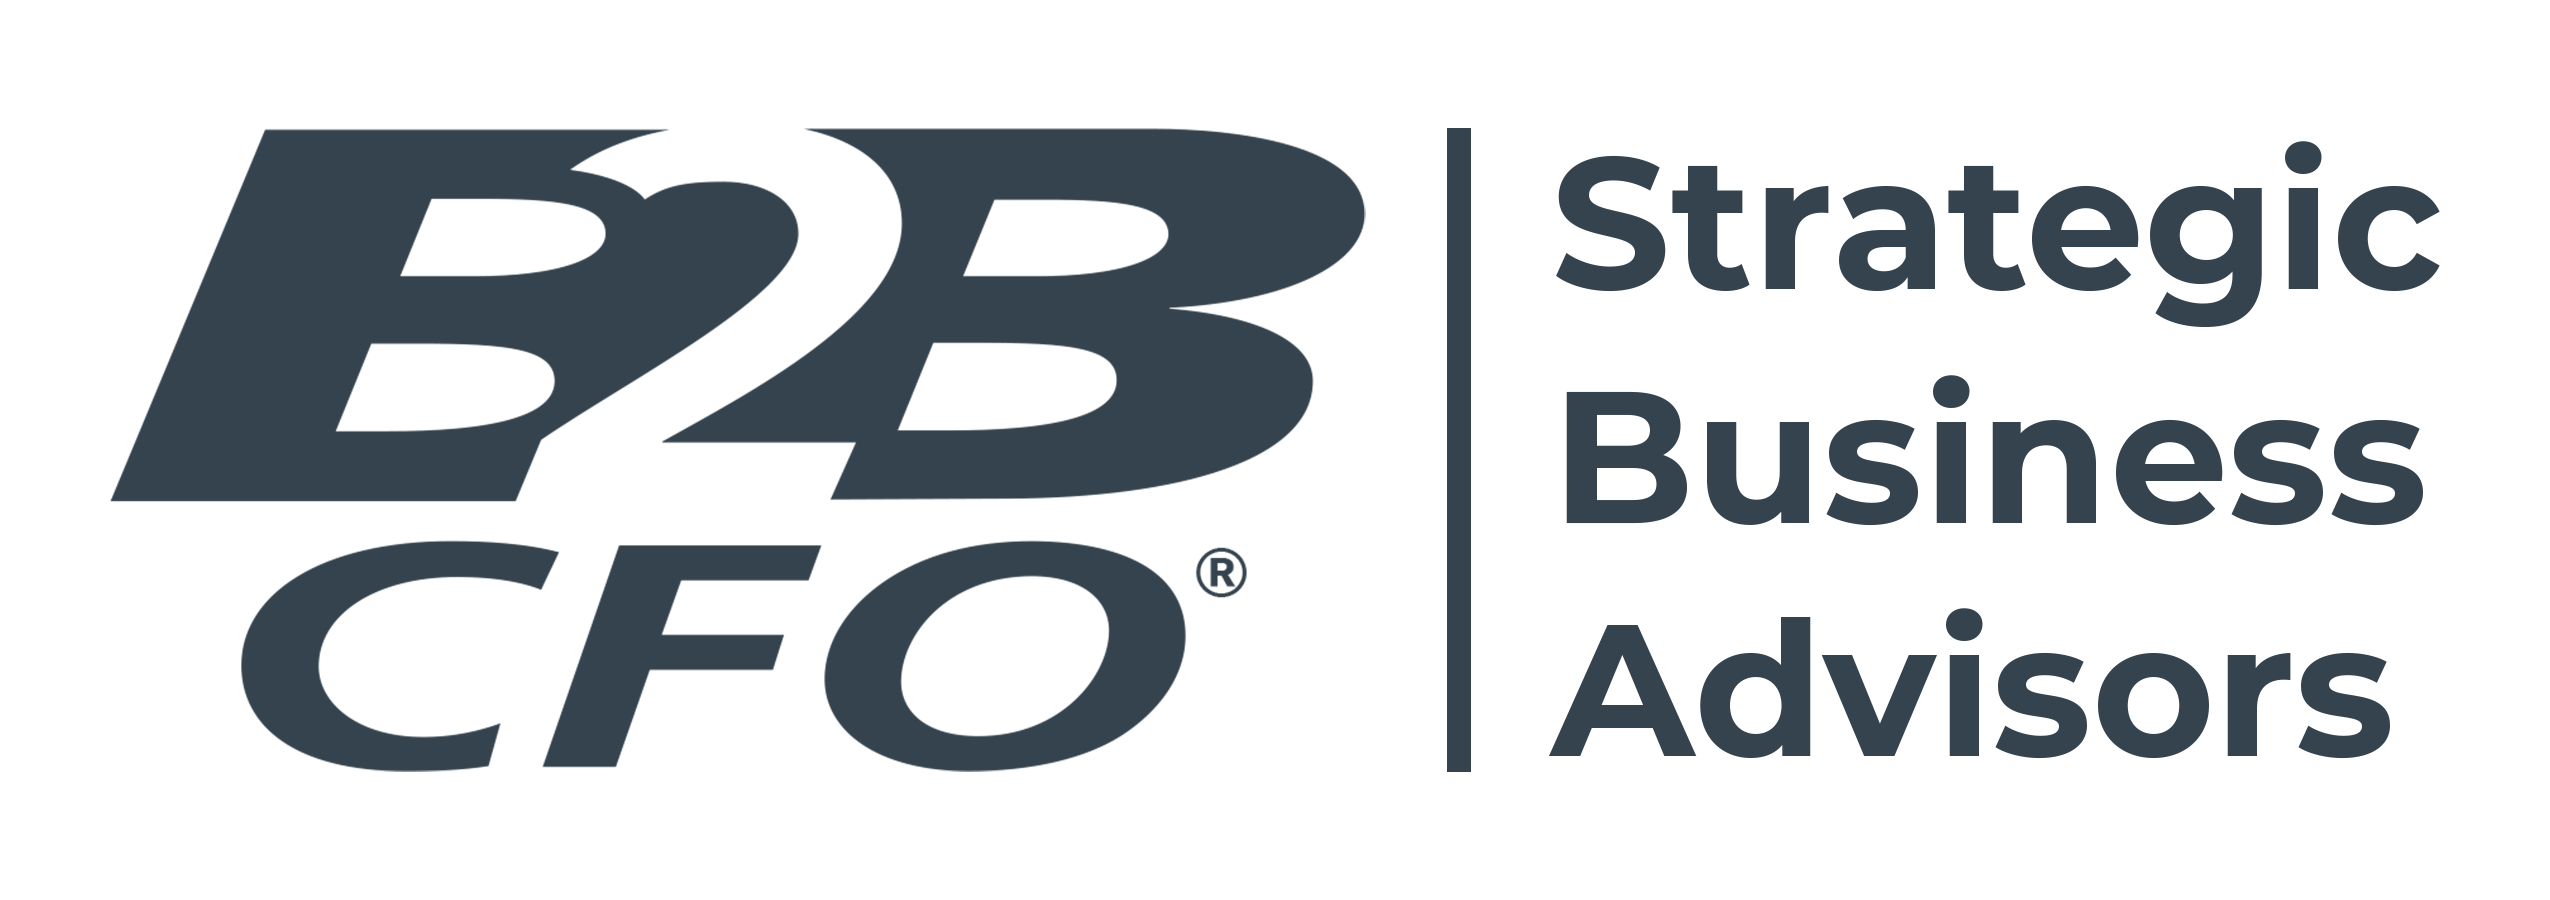 B2B-CFO-Strategic-Business-Advisors-New-Blue